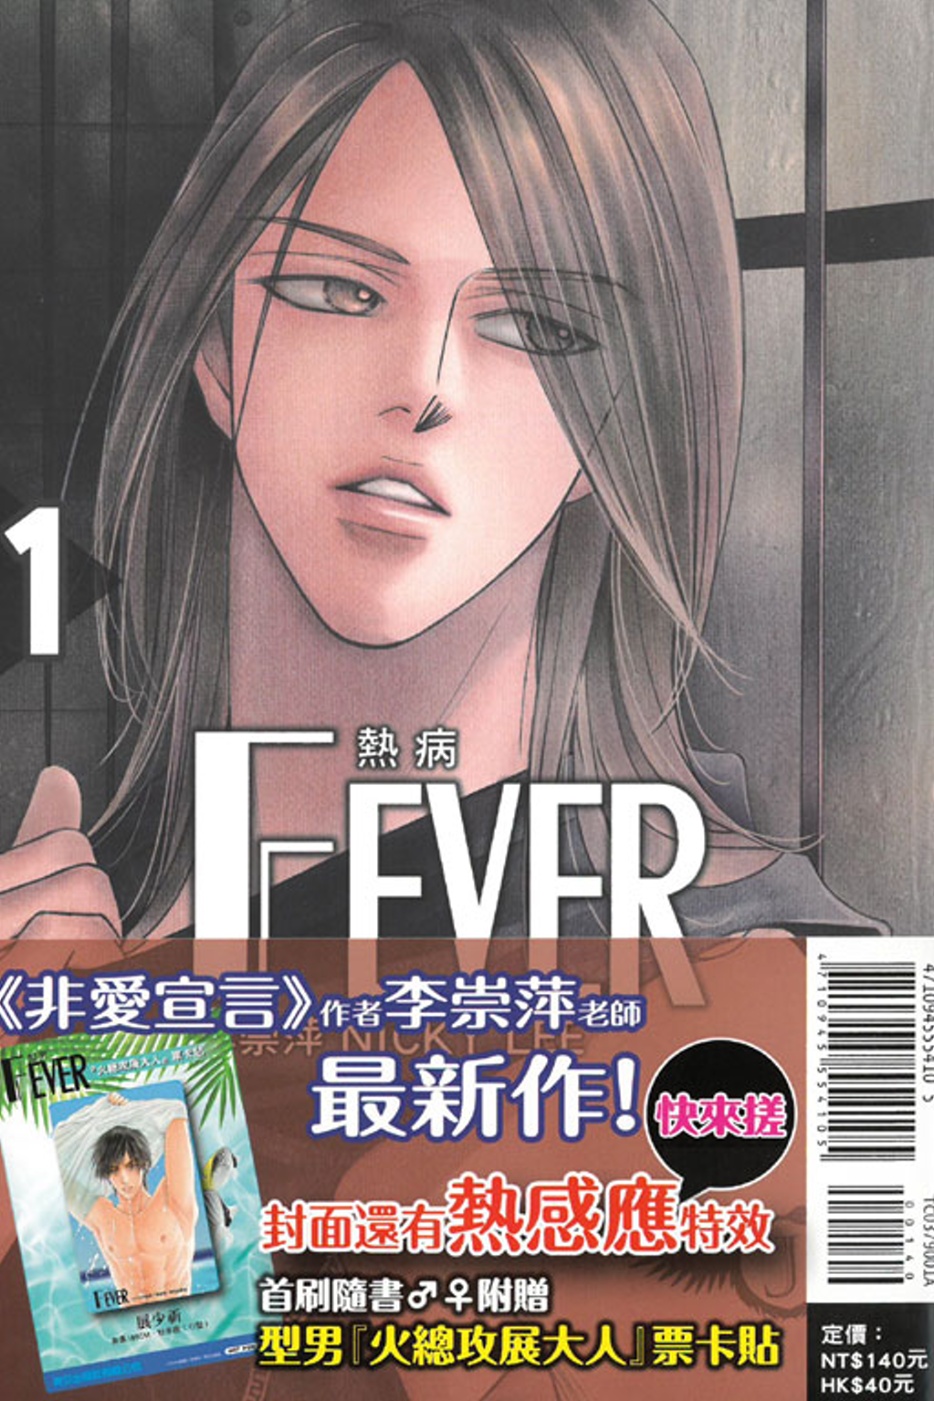 Fever熱病 1(首刷附錄版)